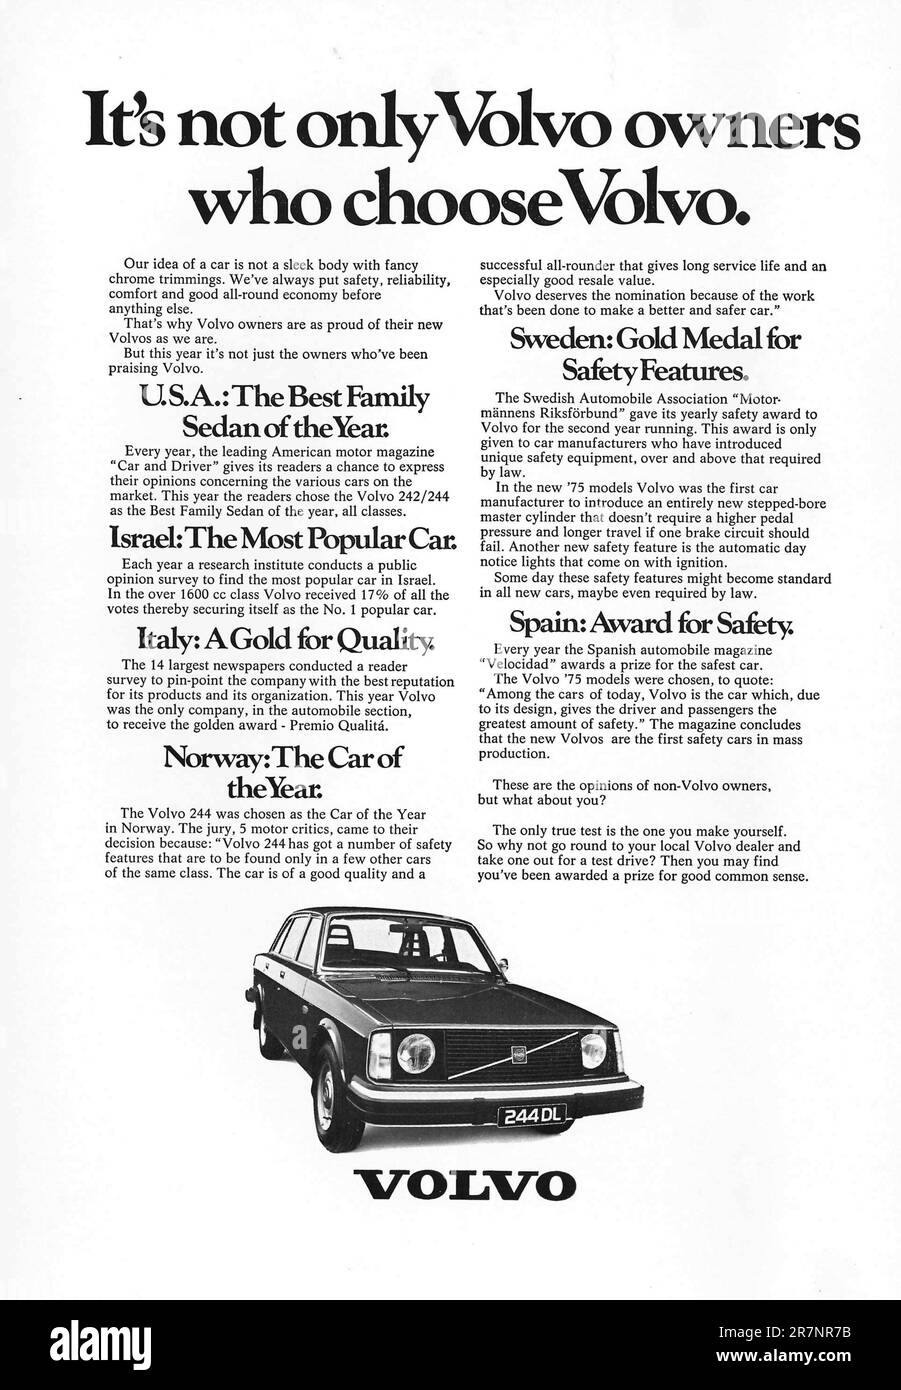 Volvo 244 DL advert in a magazine 1975 Stock Photo